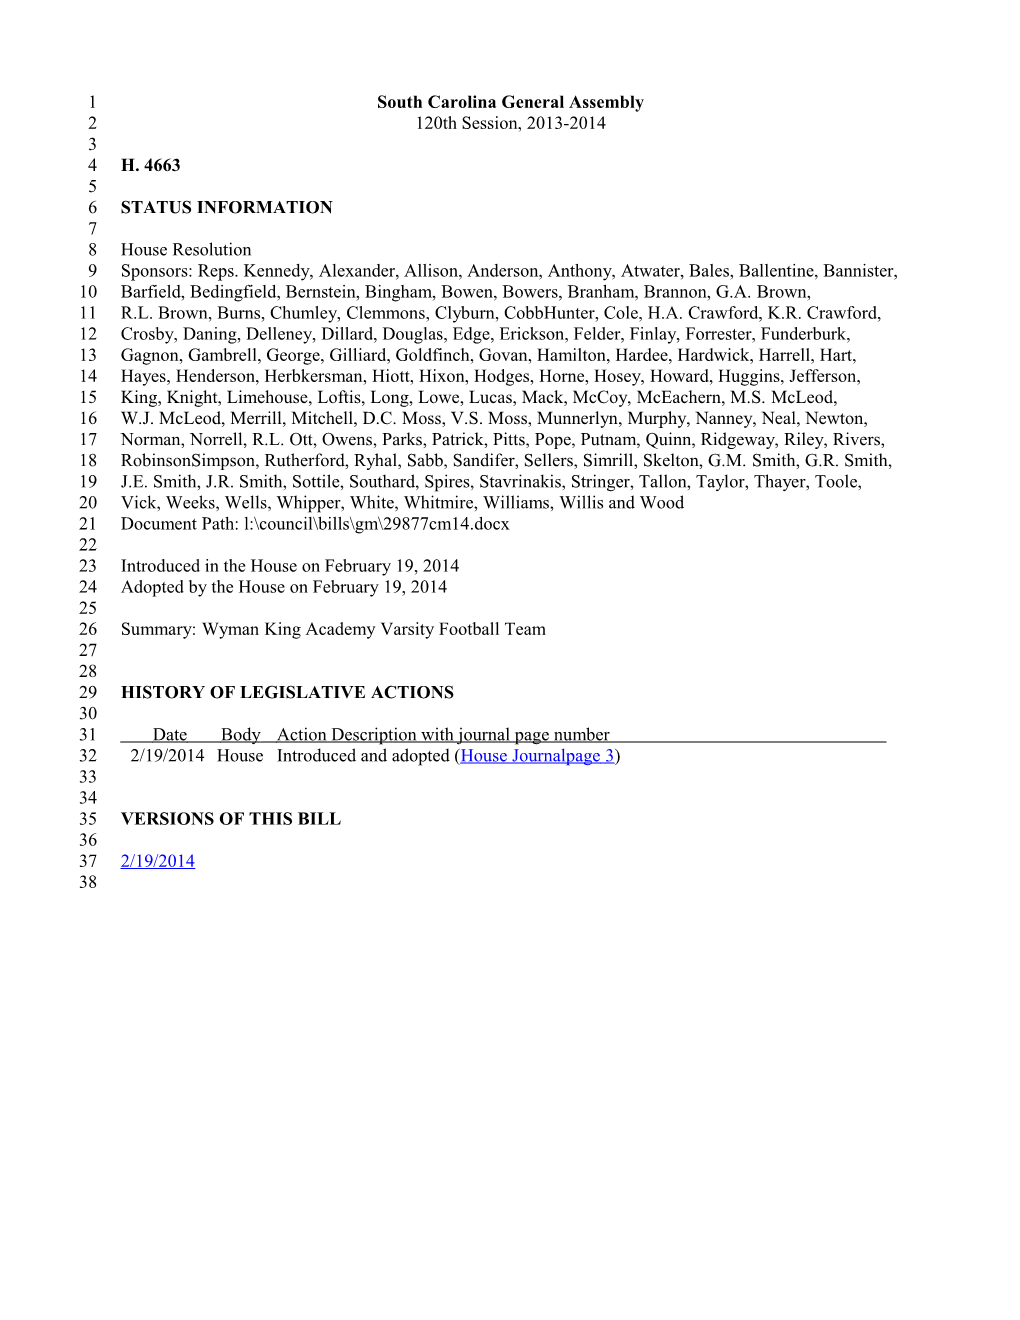 2013-2014 Bill 4663: Wyman King Academy Varsity Football Team - South Carolina Legislature